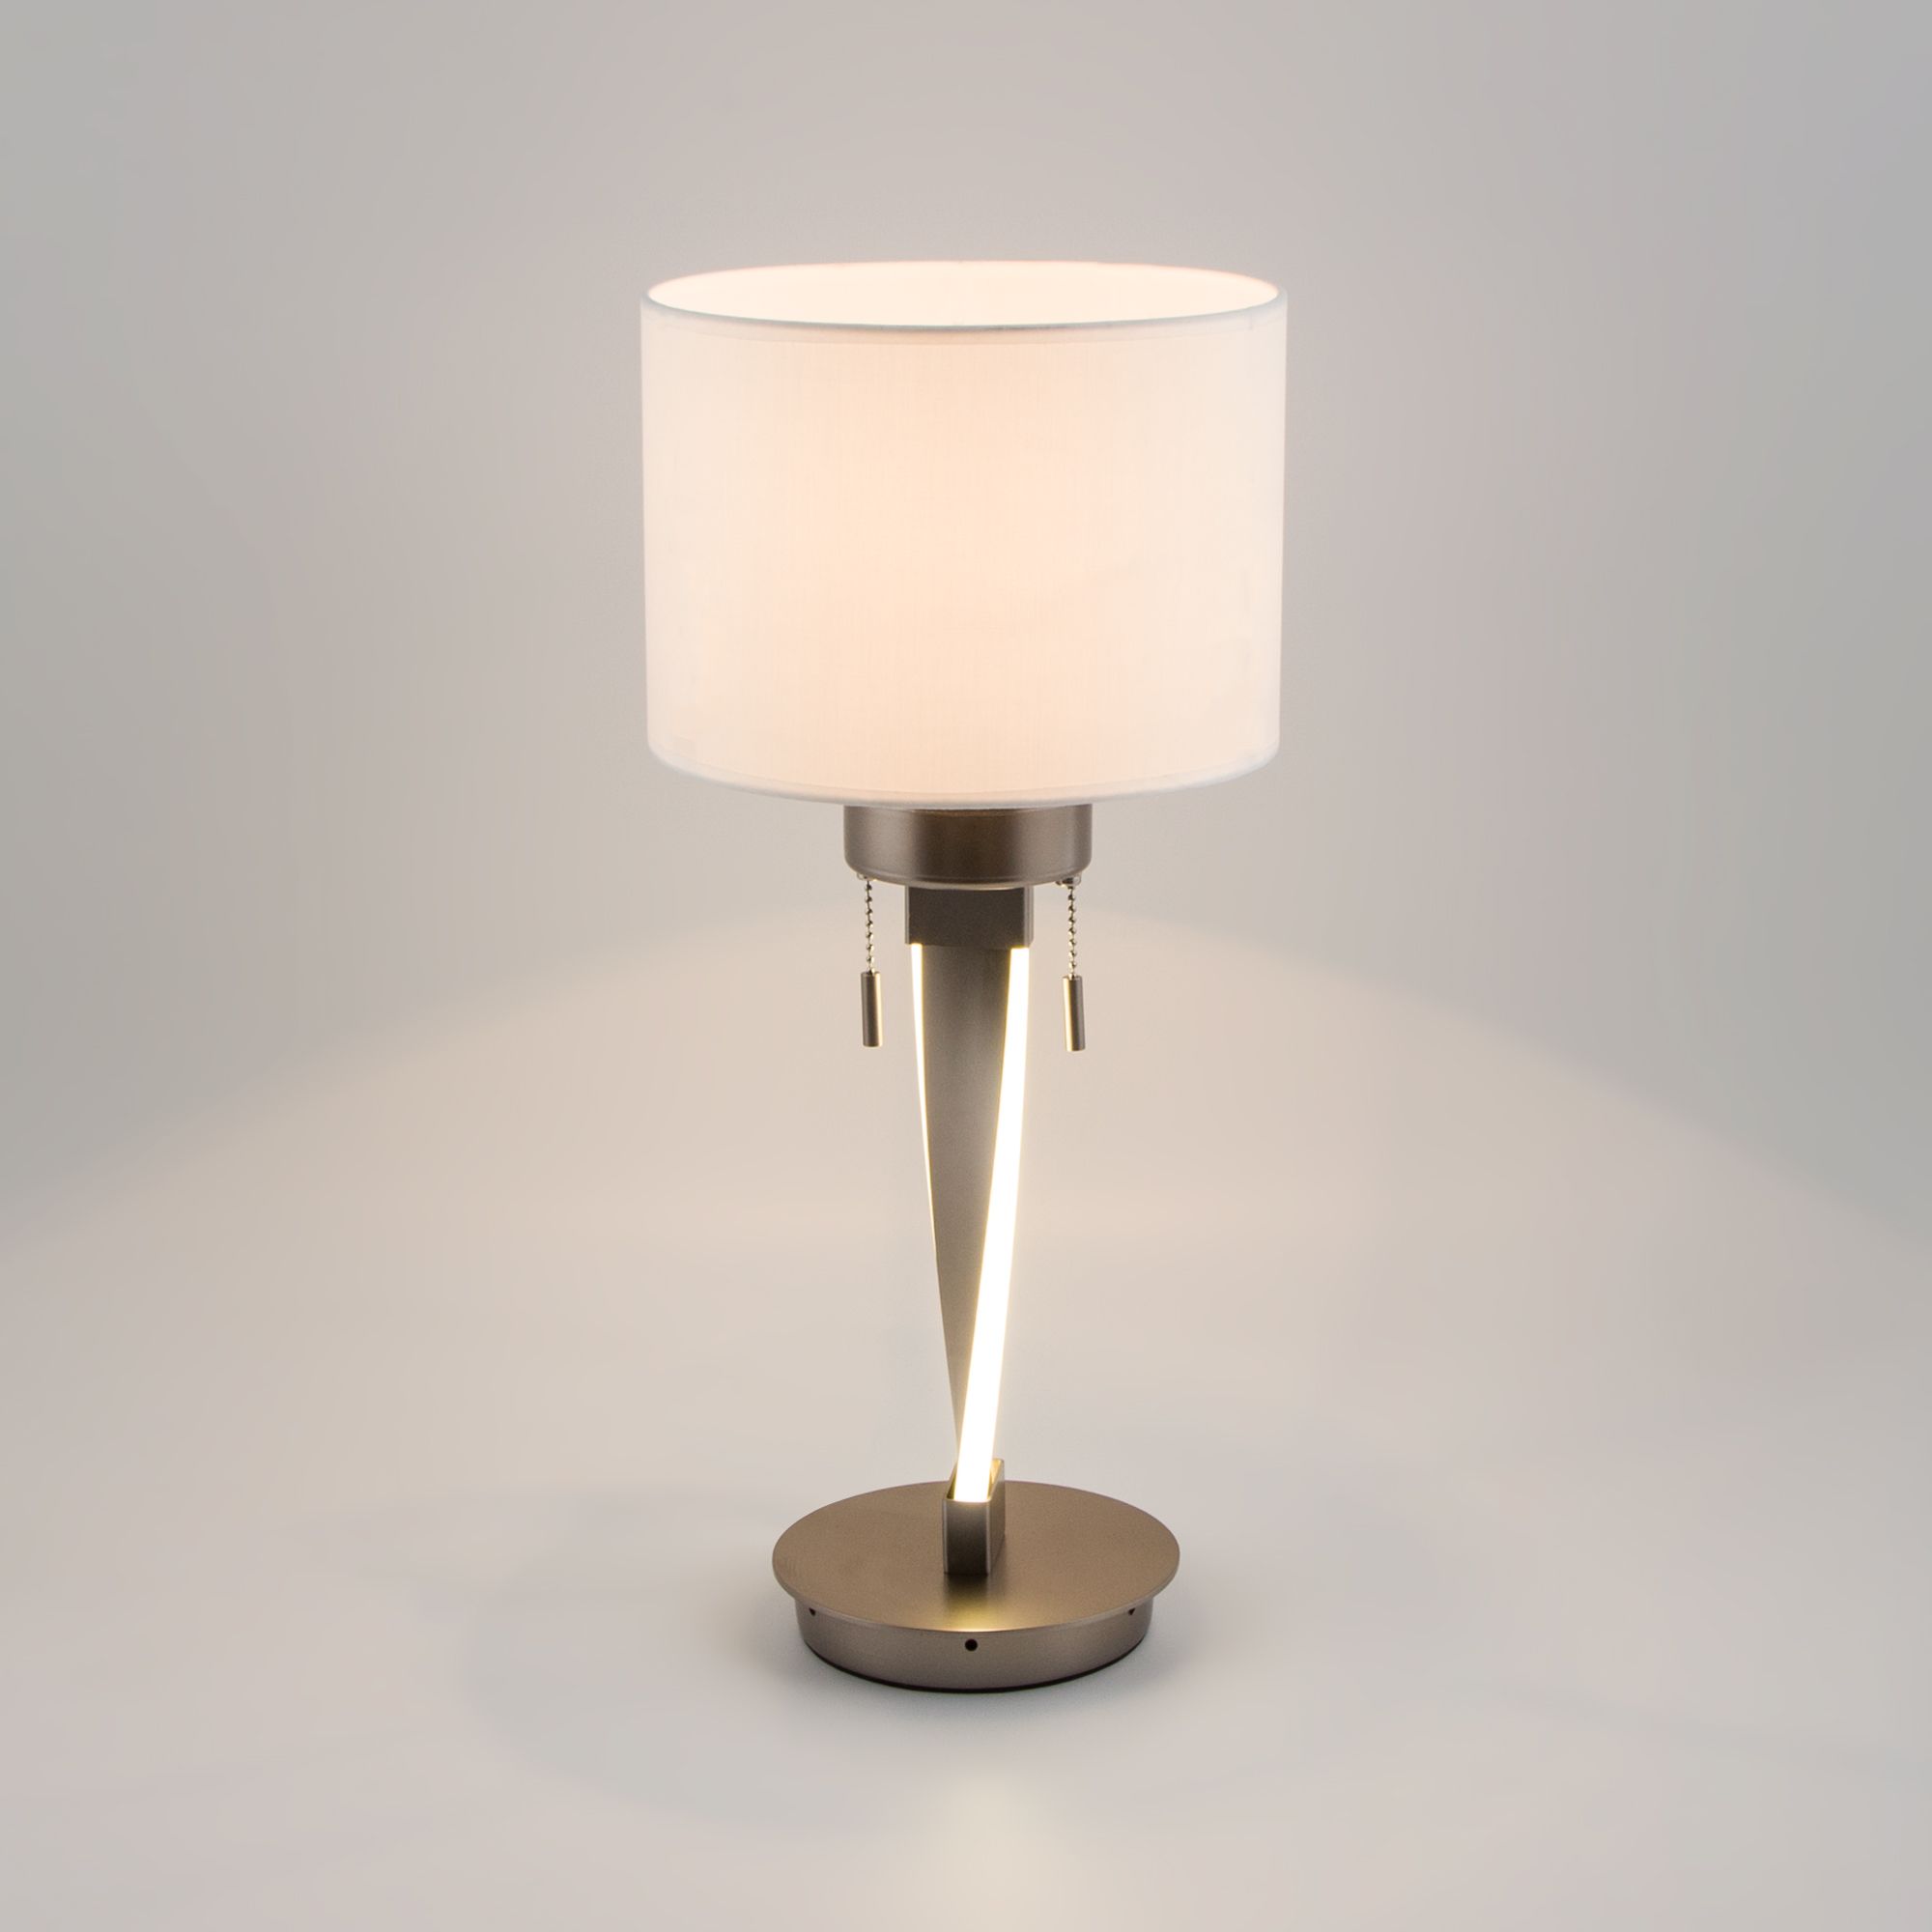 Настольная лампа со светодиодной подсветкой арматуры Bogate's Titan 993. Фото 2